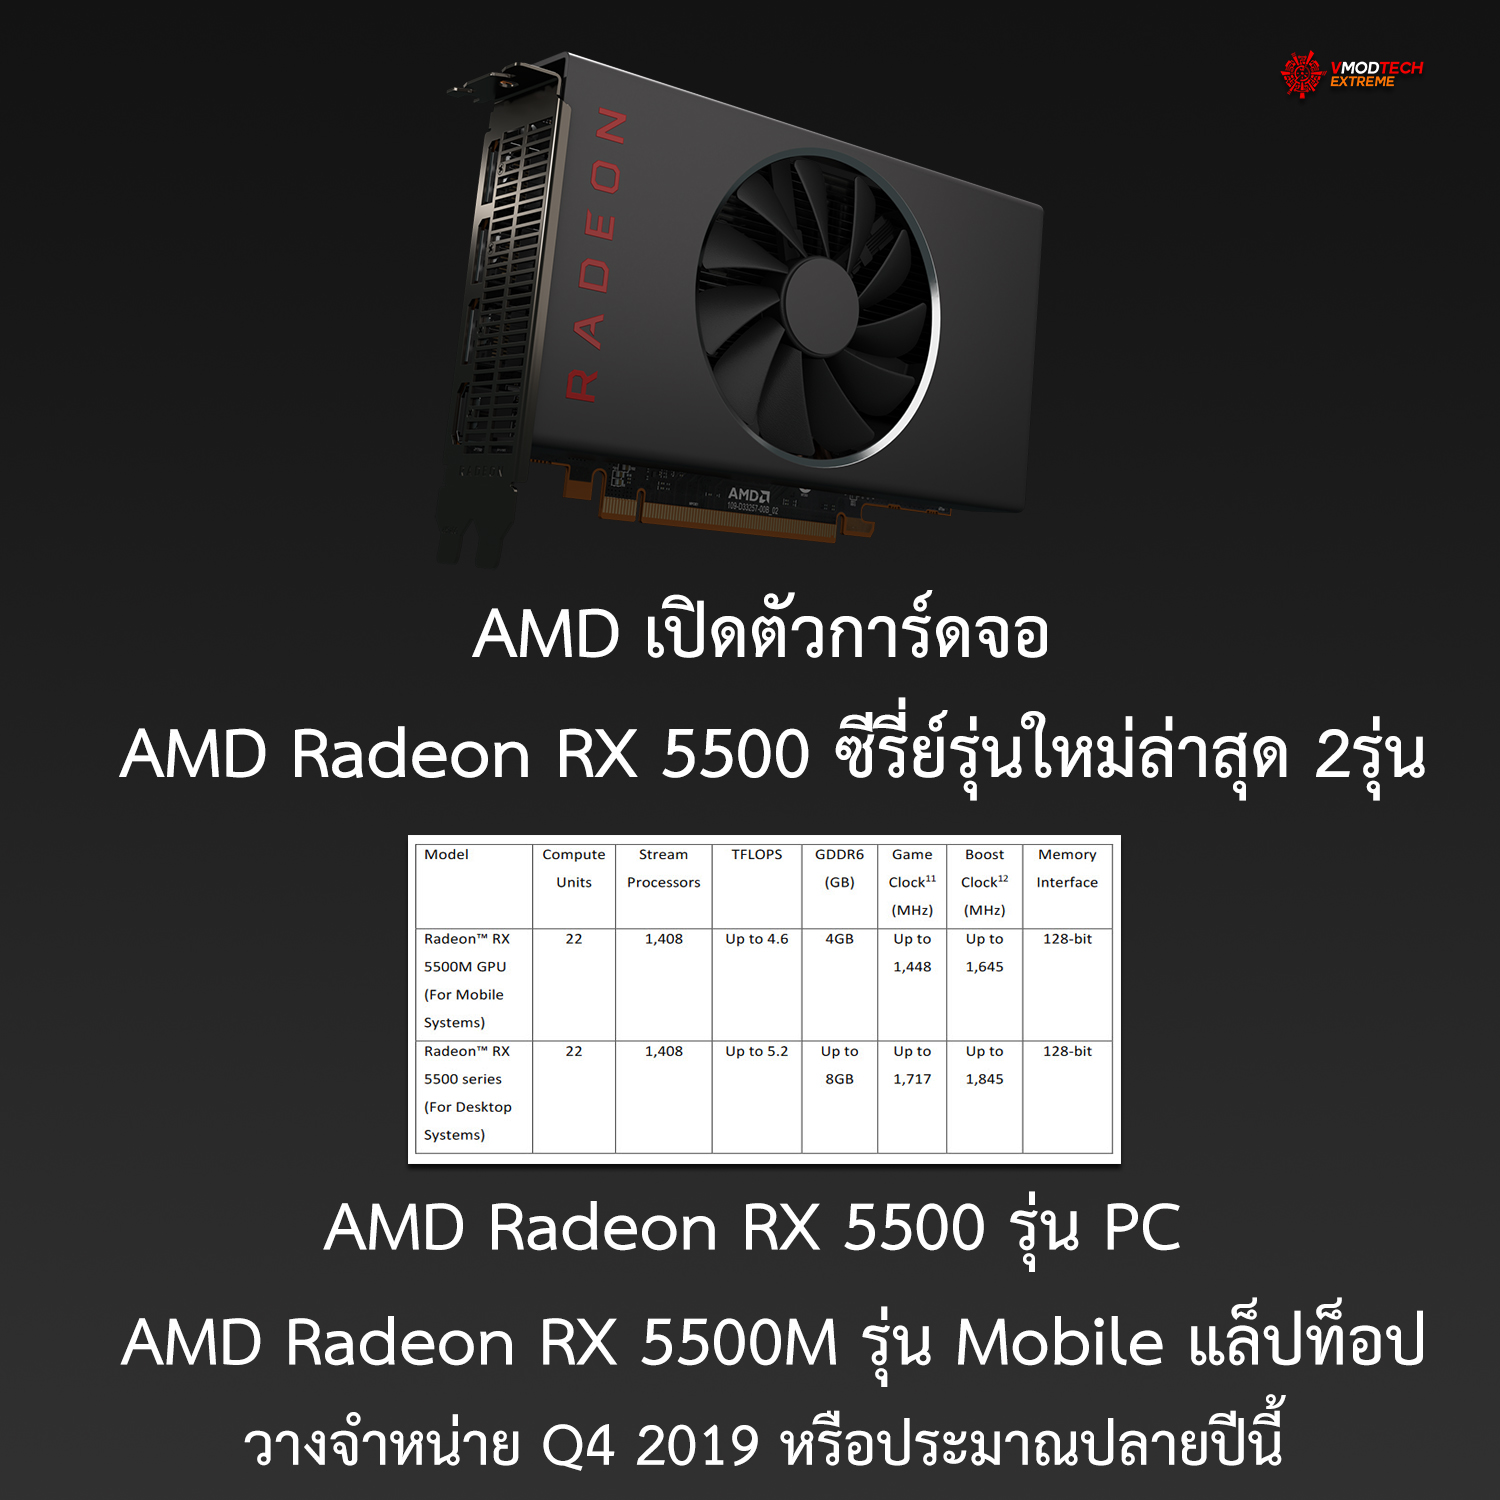 amd radeon rx 5500 amd radeon rx 5500m AMD เปิดตัวการ์ดจอ AMD Radeon RX 5500 ซีรี่ย์รุ่นใหม่ล่าสุดขนาด 7nm ทั้งเดสก์ท็อปและแล็ปท็อปเน้นตอบโจทย์เกมส์มิ่งในราคาสุดคุ้ม